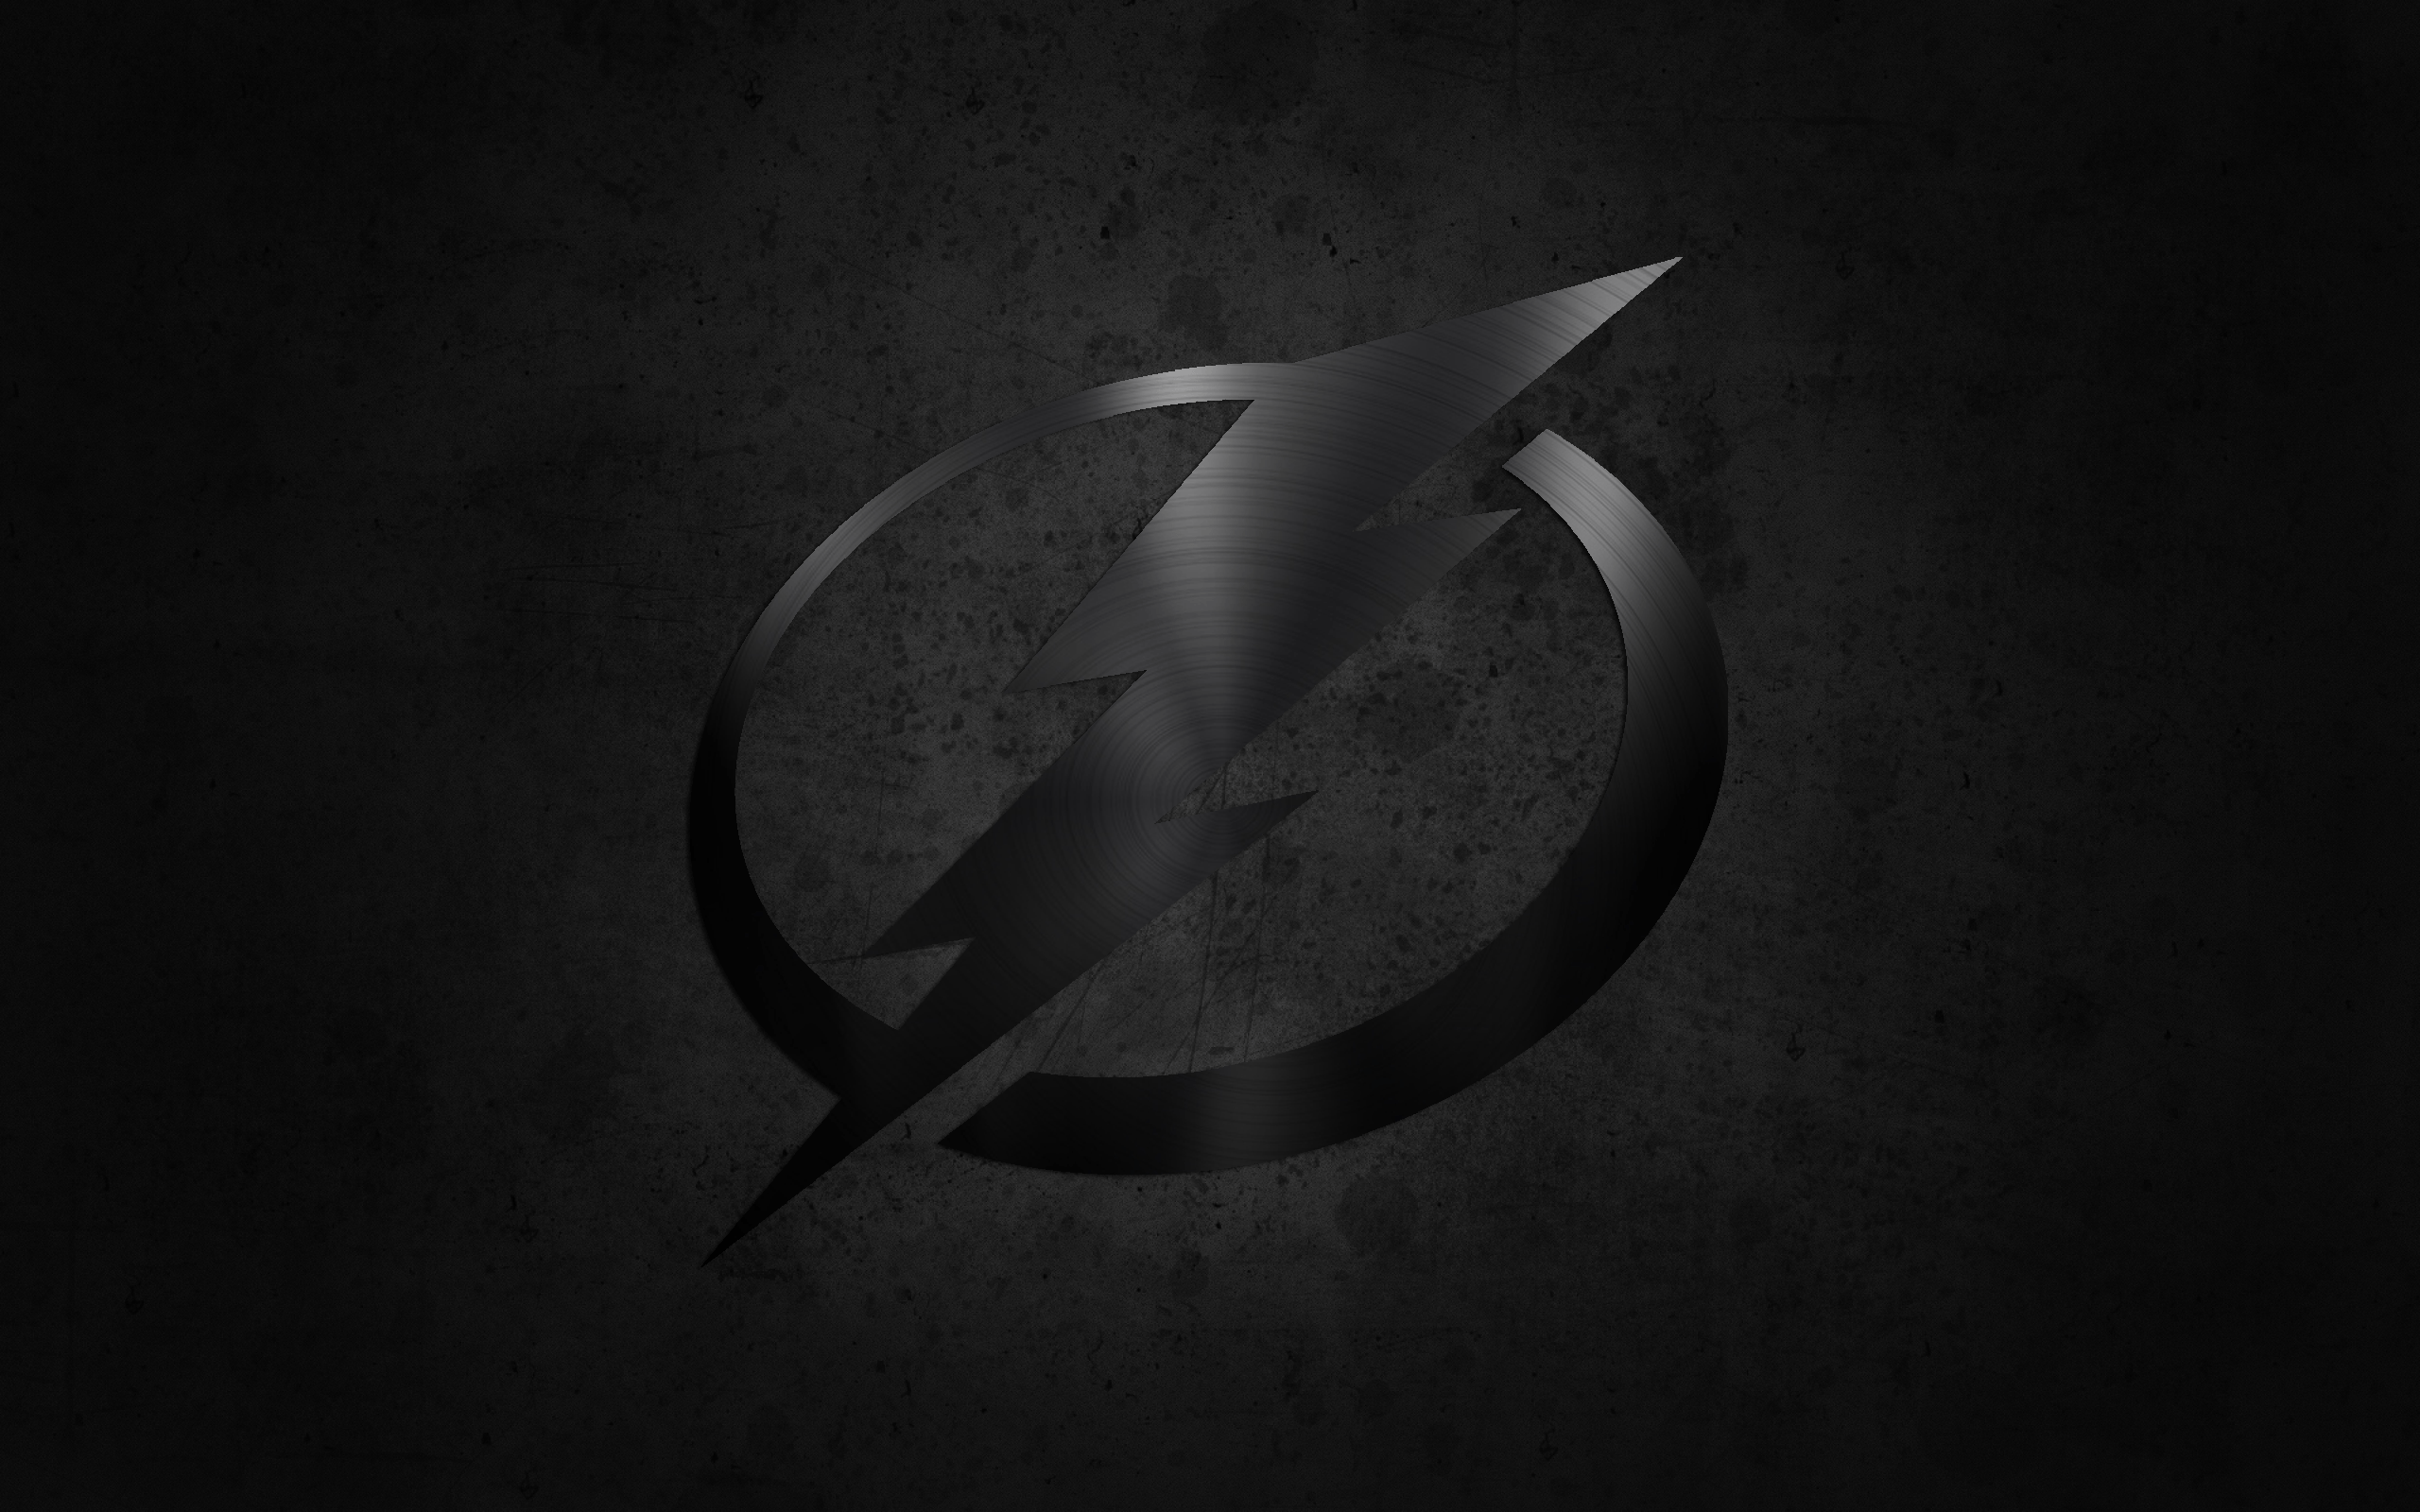 Cool Lightning Logo - Got bored at work and made a Lightning logo wallpaper ...